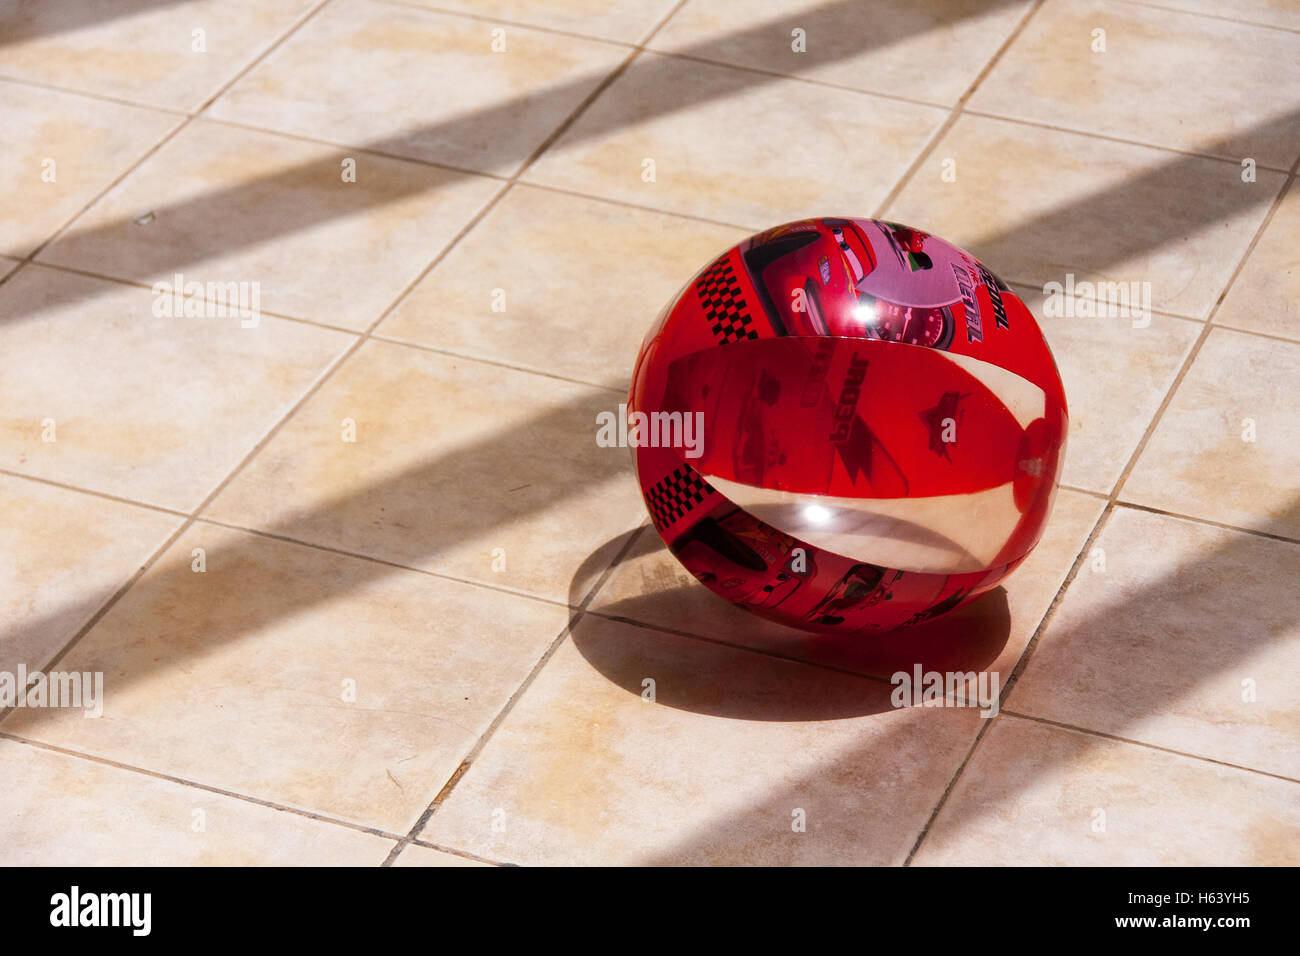 beach ball in sun on tiled floor Stock Photo